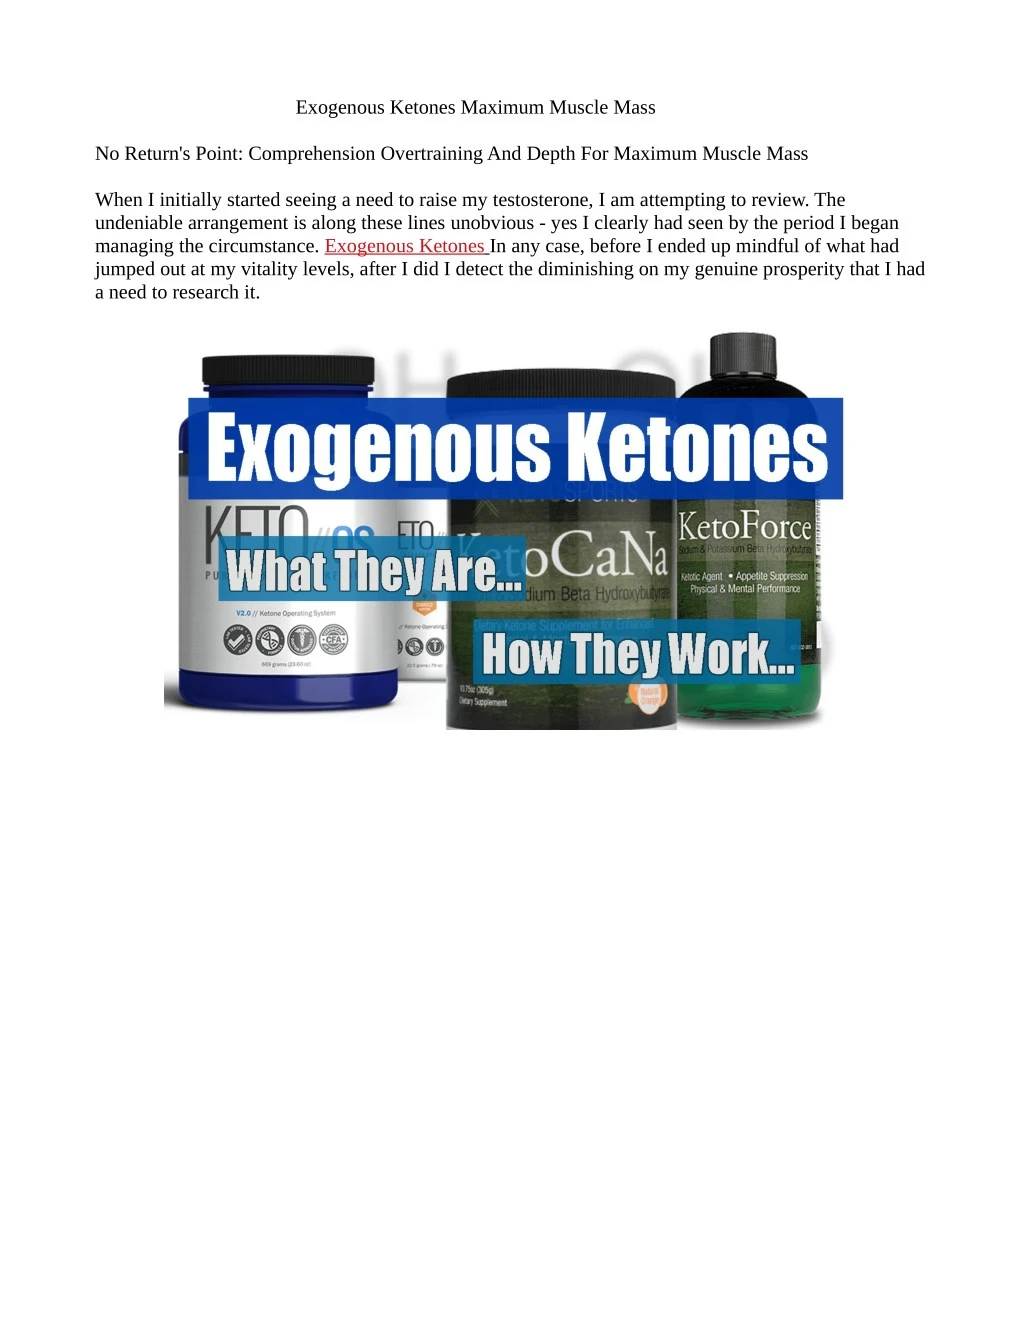 exogenous ketones maximum muscle mass